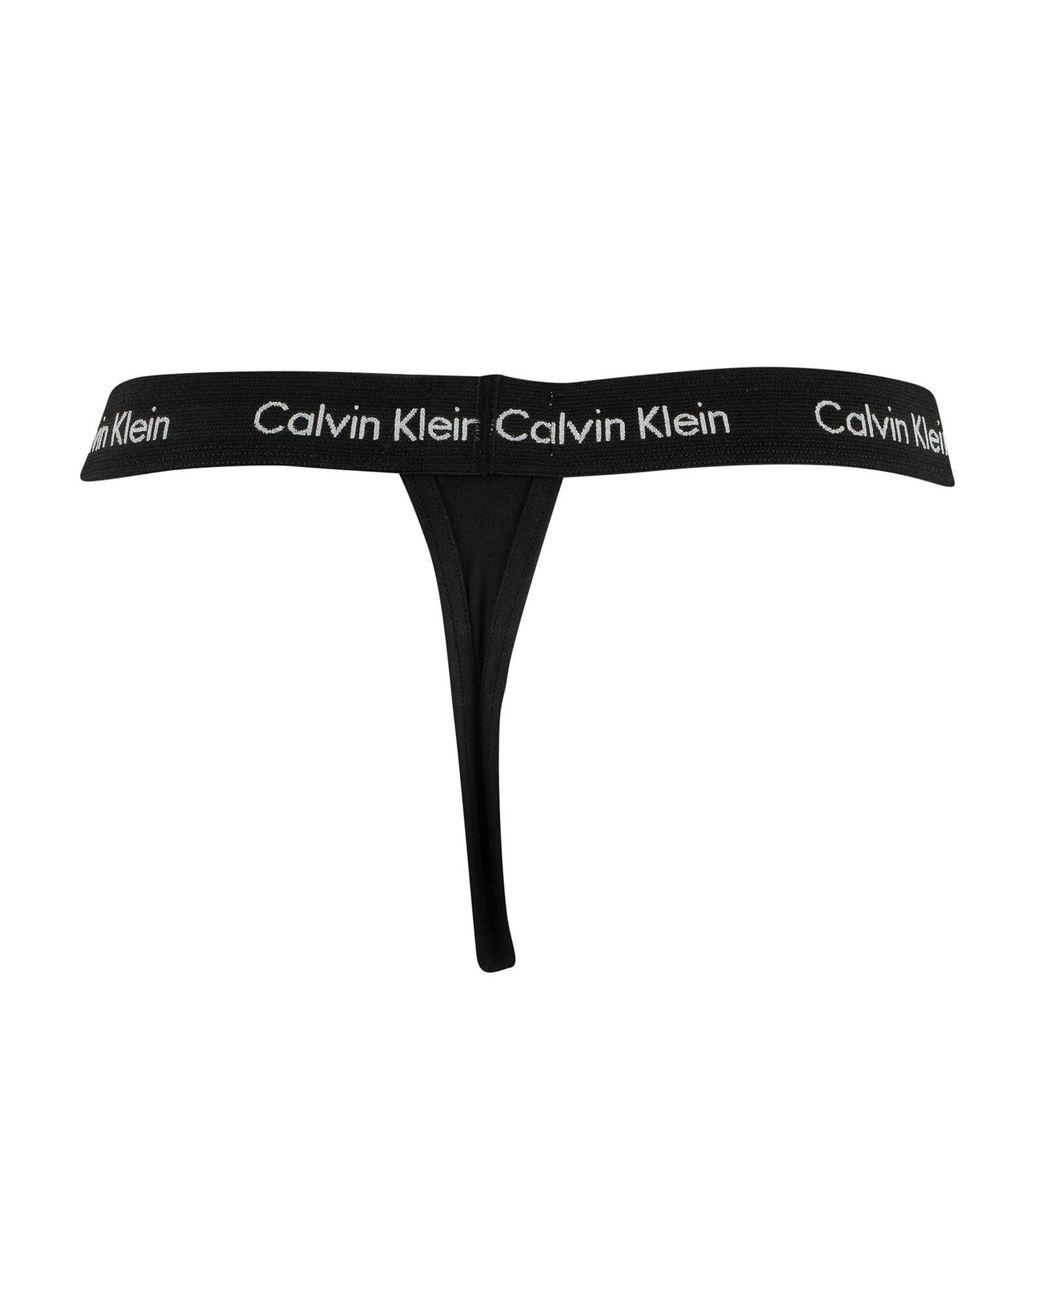 Calvin Klein 2 Pack Thongs in Black for Men - Save 9% | Lyst